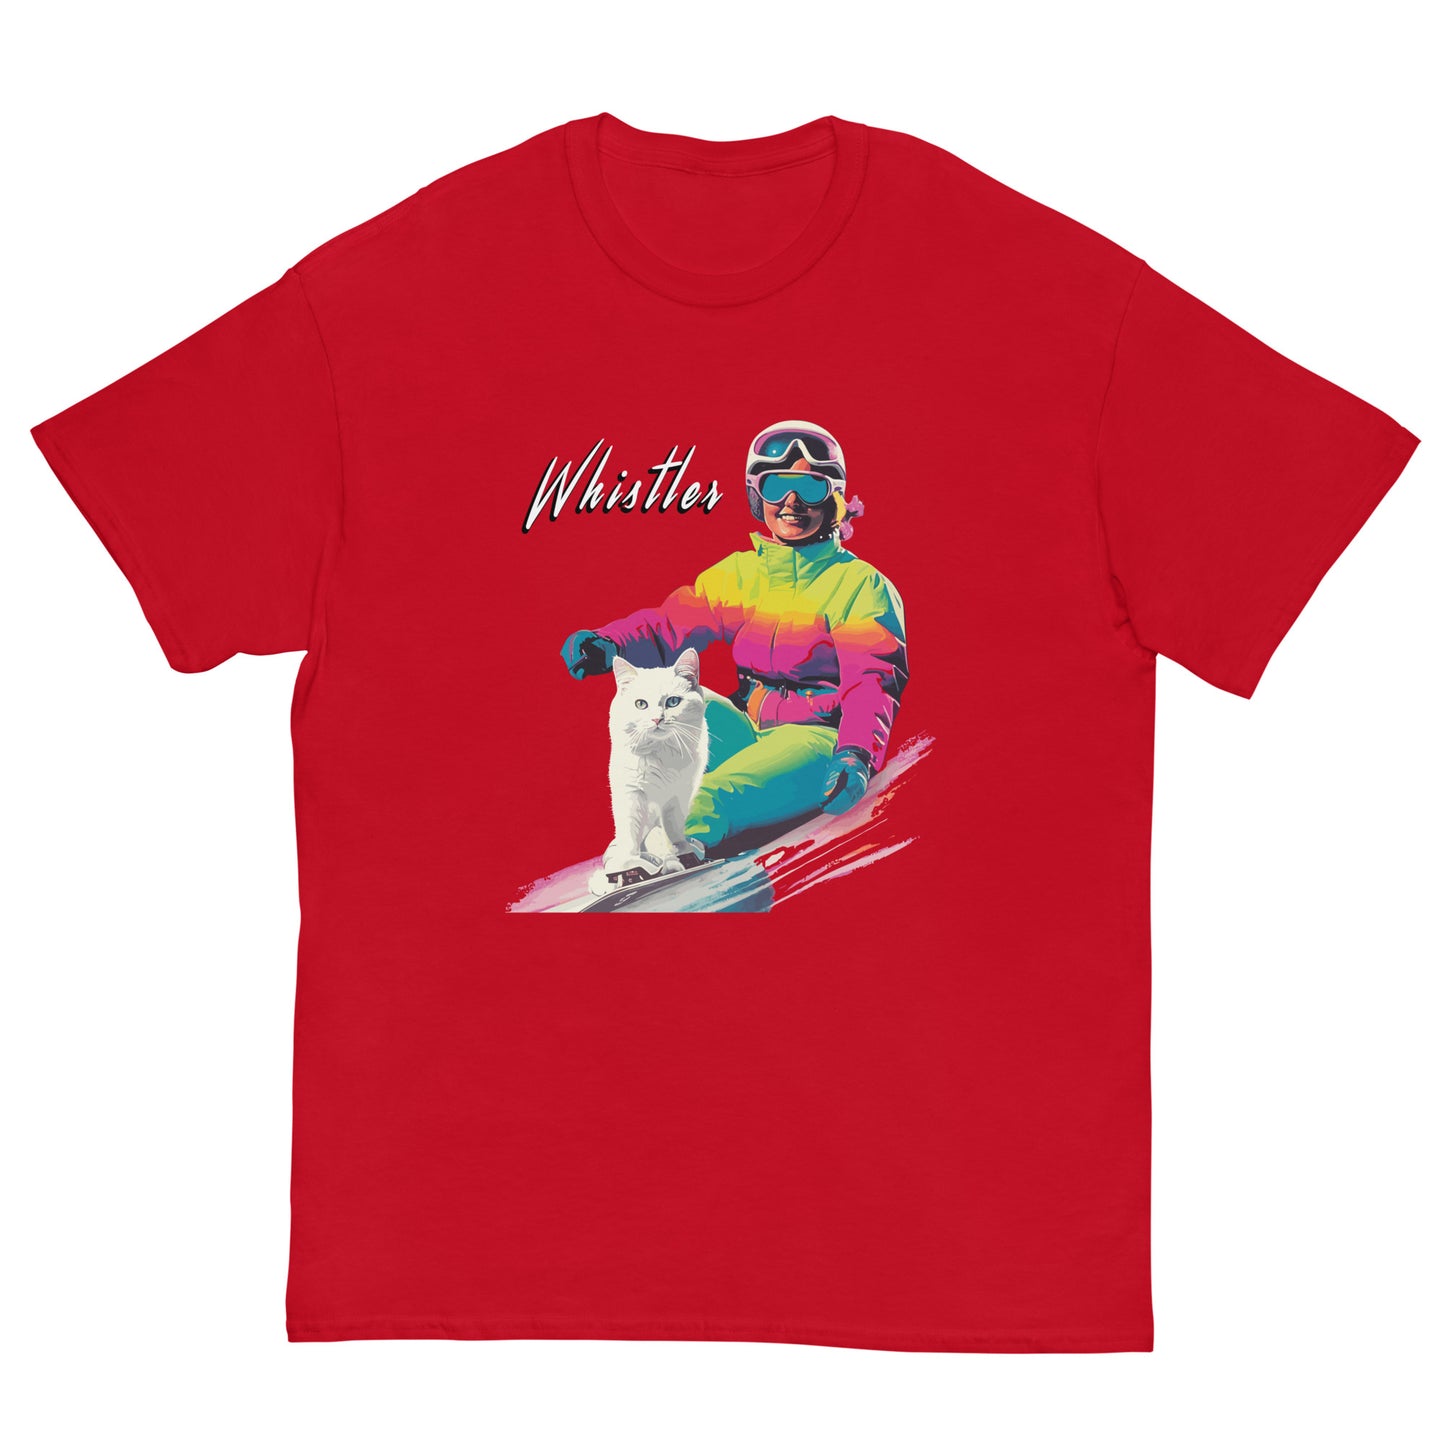 Whistler cat skiing printed t-shirt